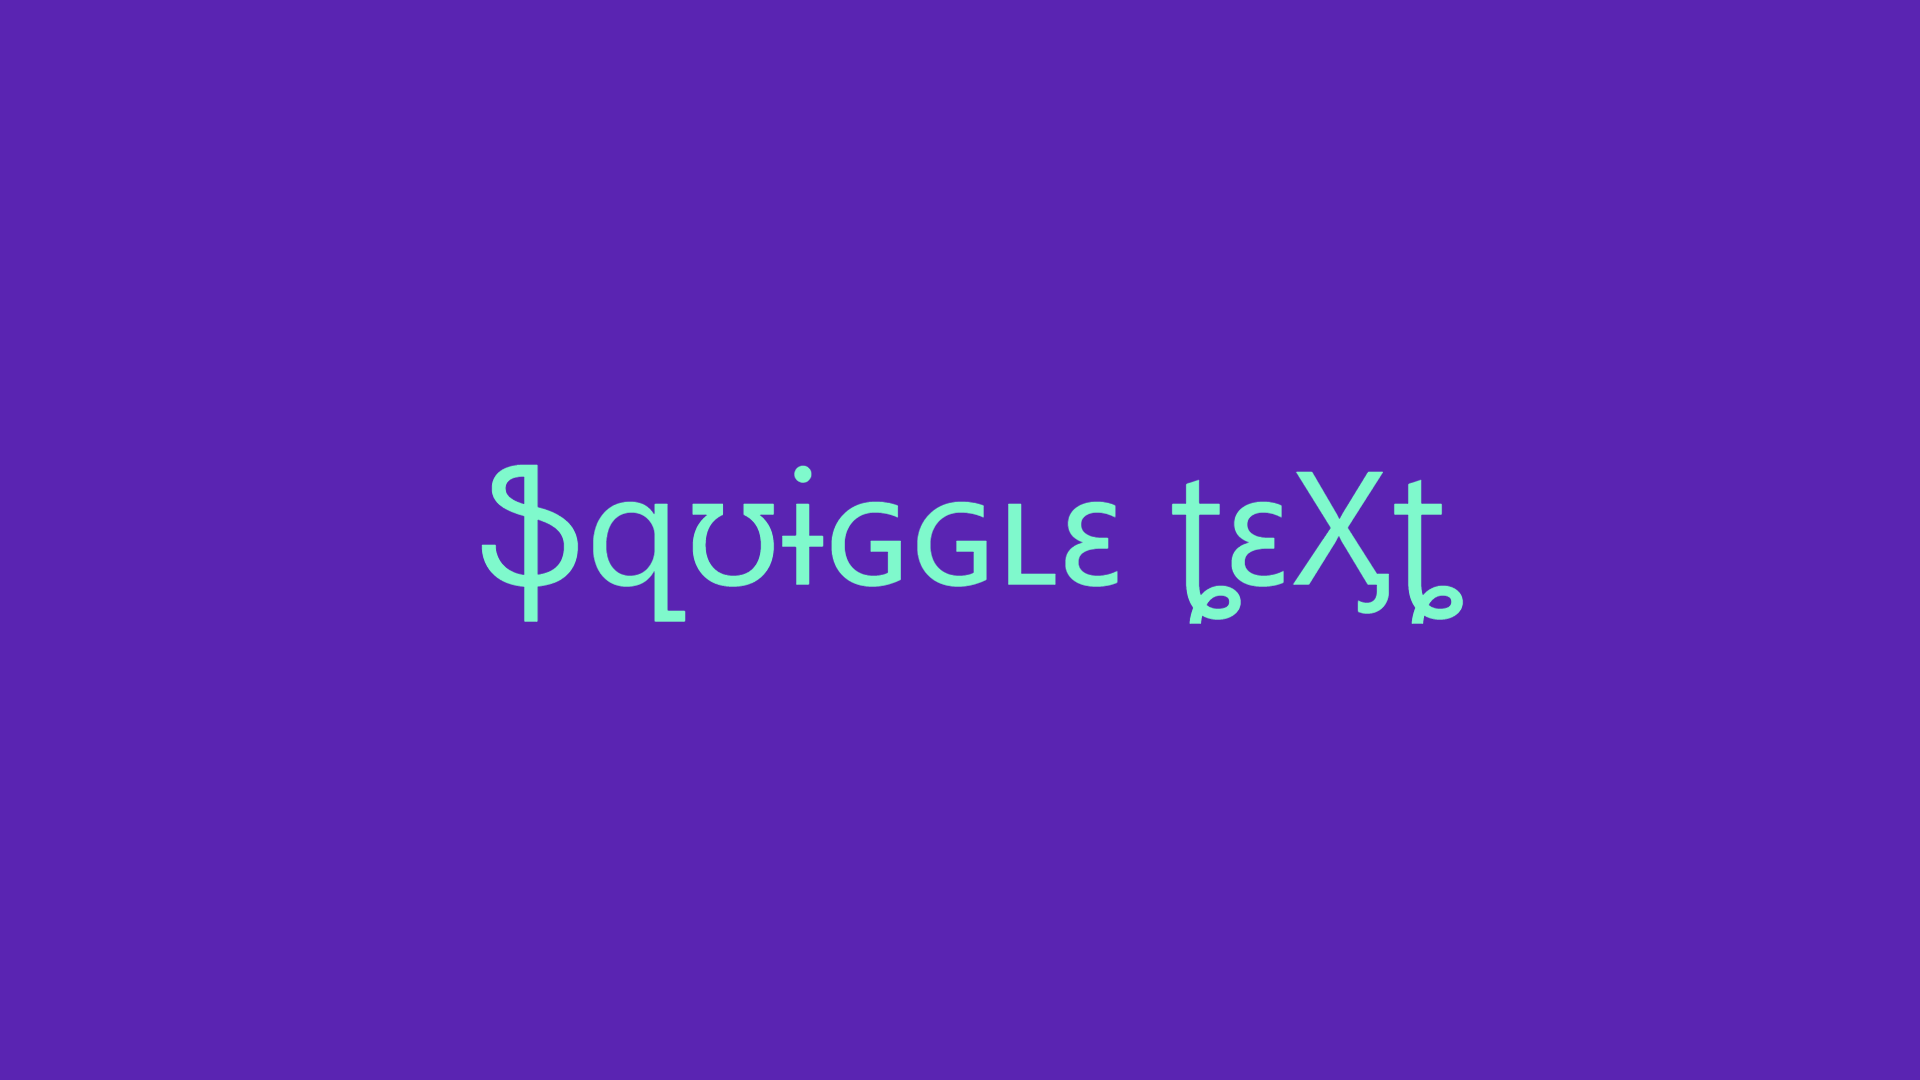 Squiggle Text Generator